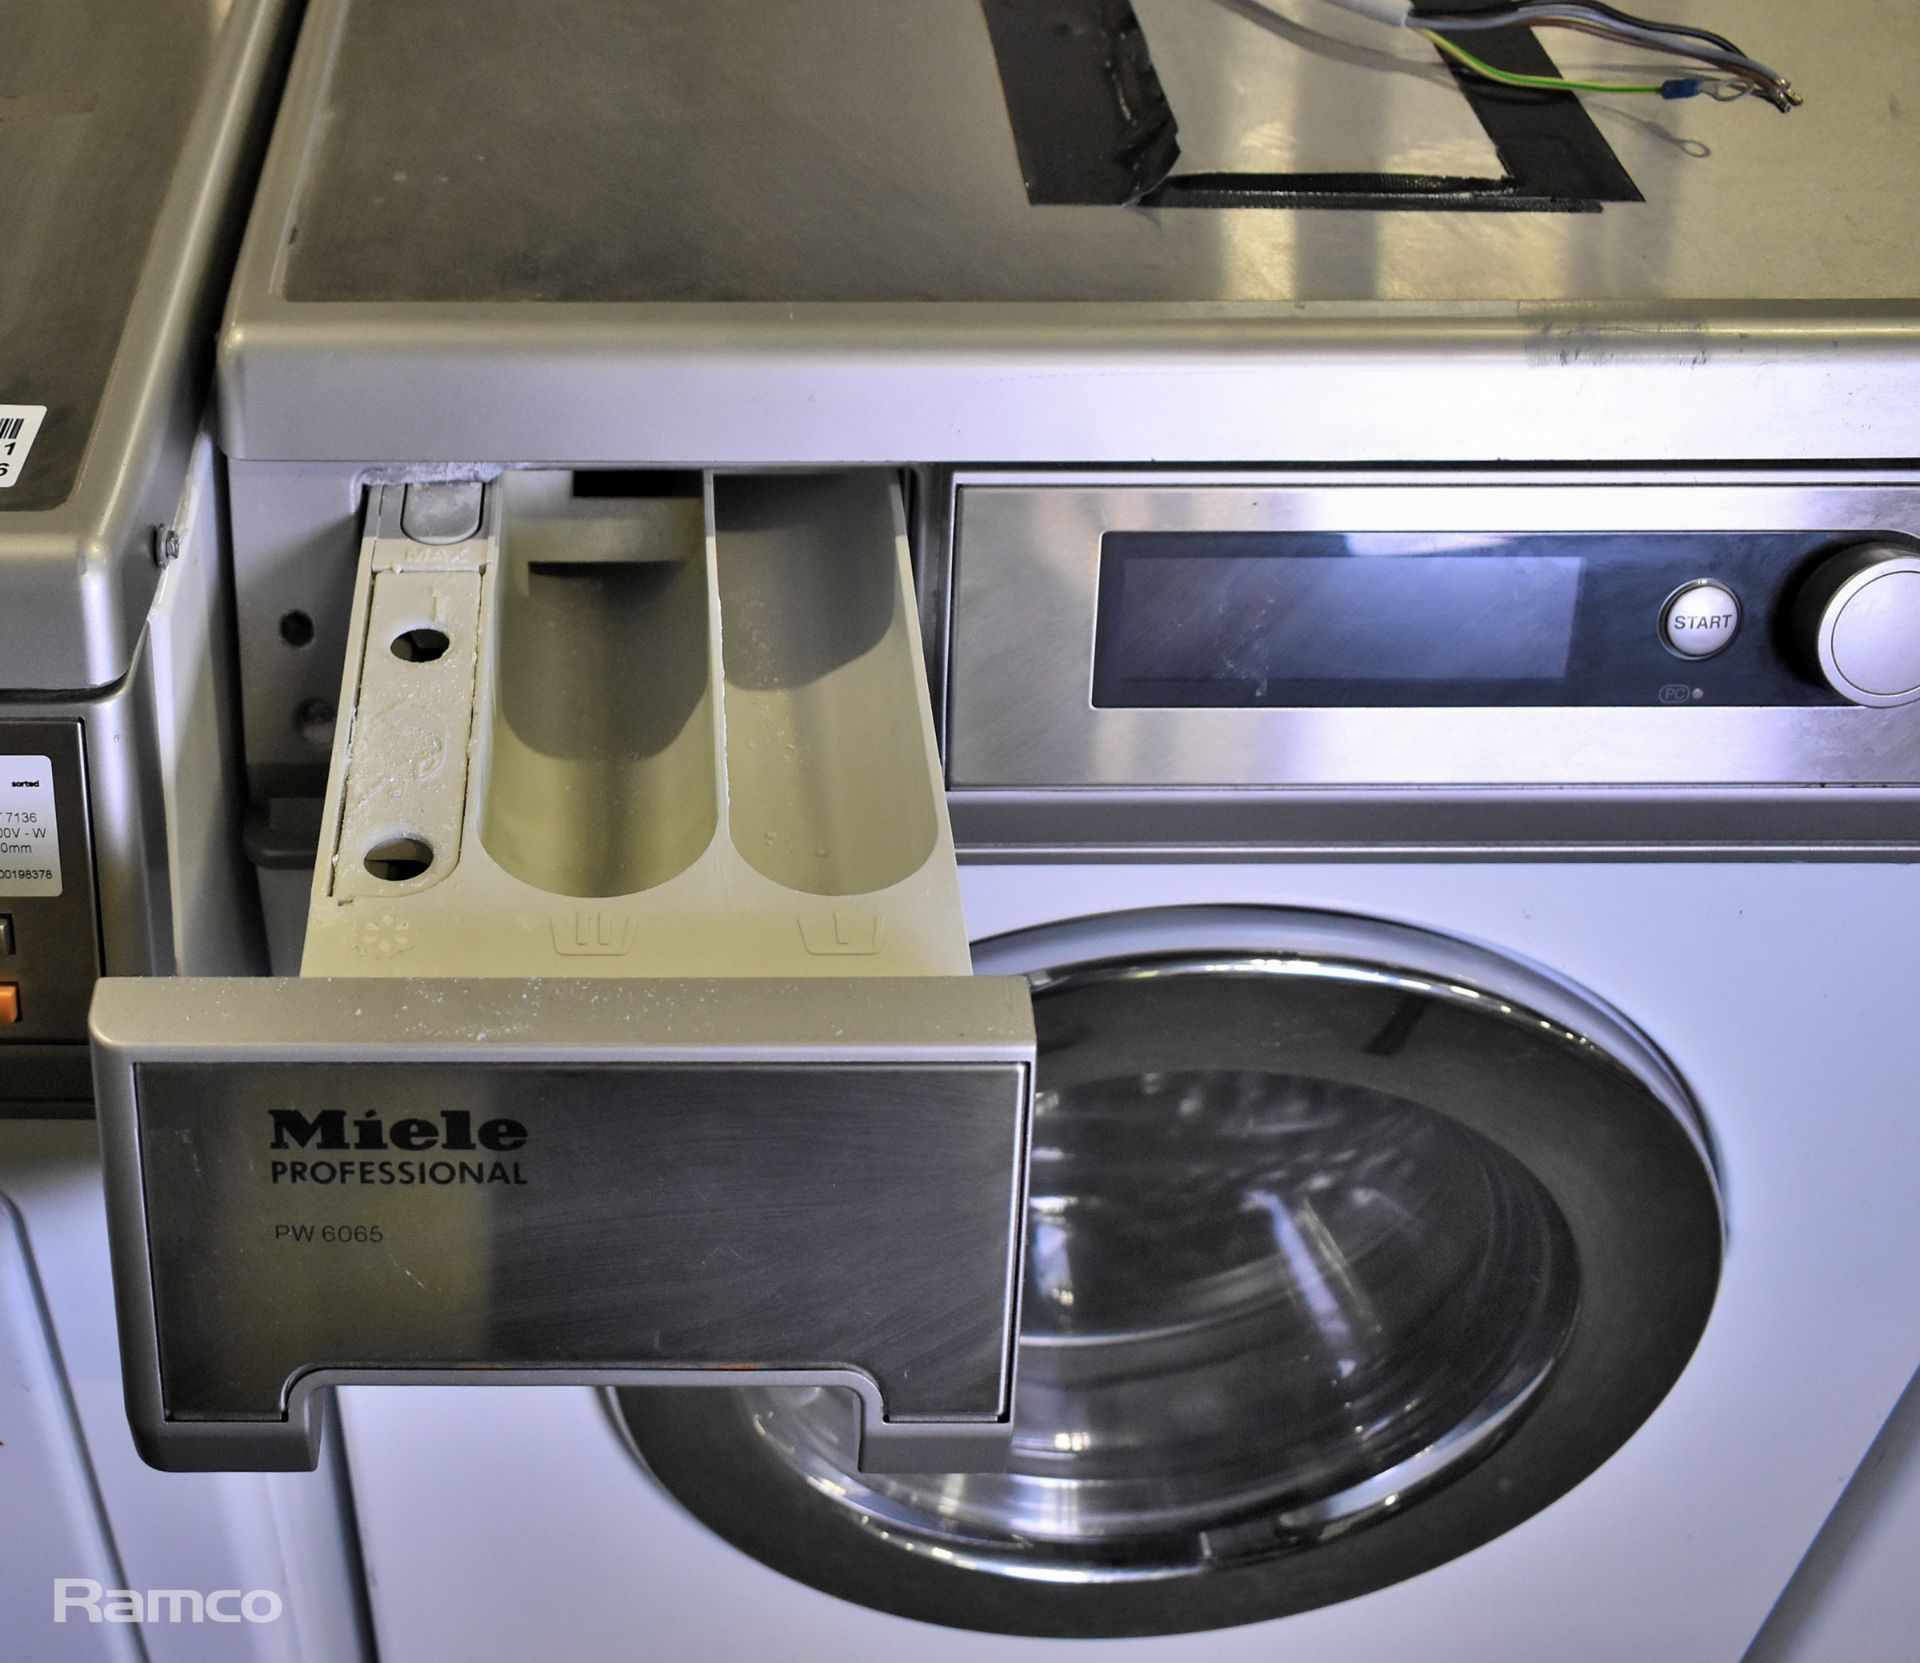 Miele Professional PW 6065 washing machine - 6.5kg capacity - W 595 x D 725 x H 850mm - Bild 2 aus 3